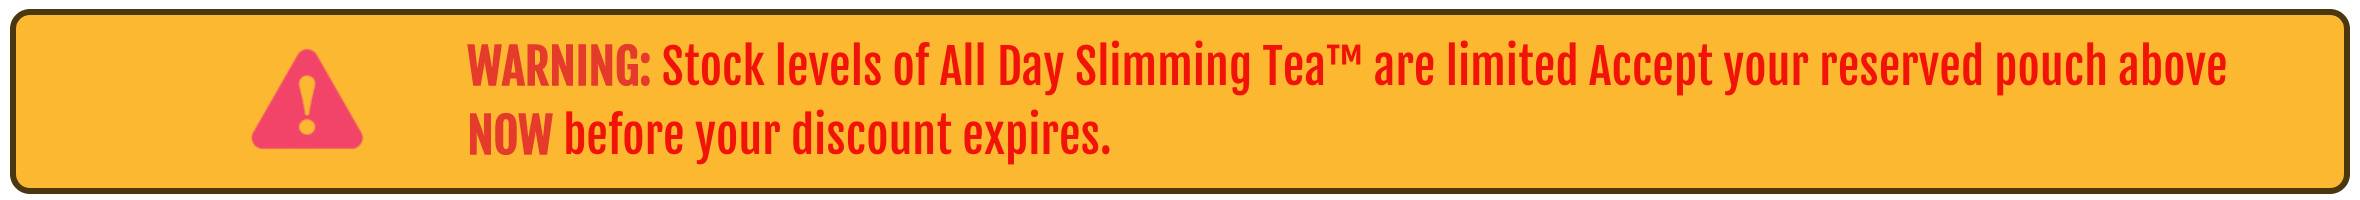 All Day Slimming Tea - WARNING